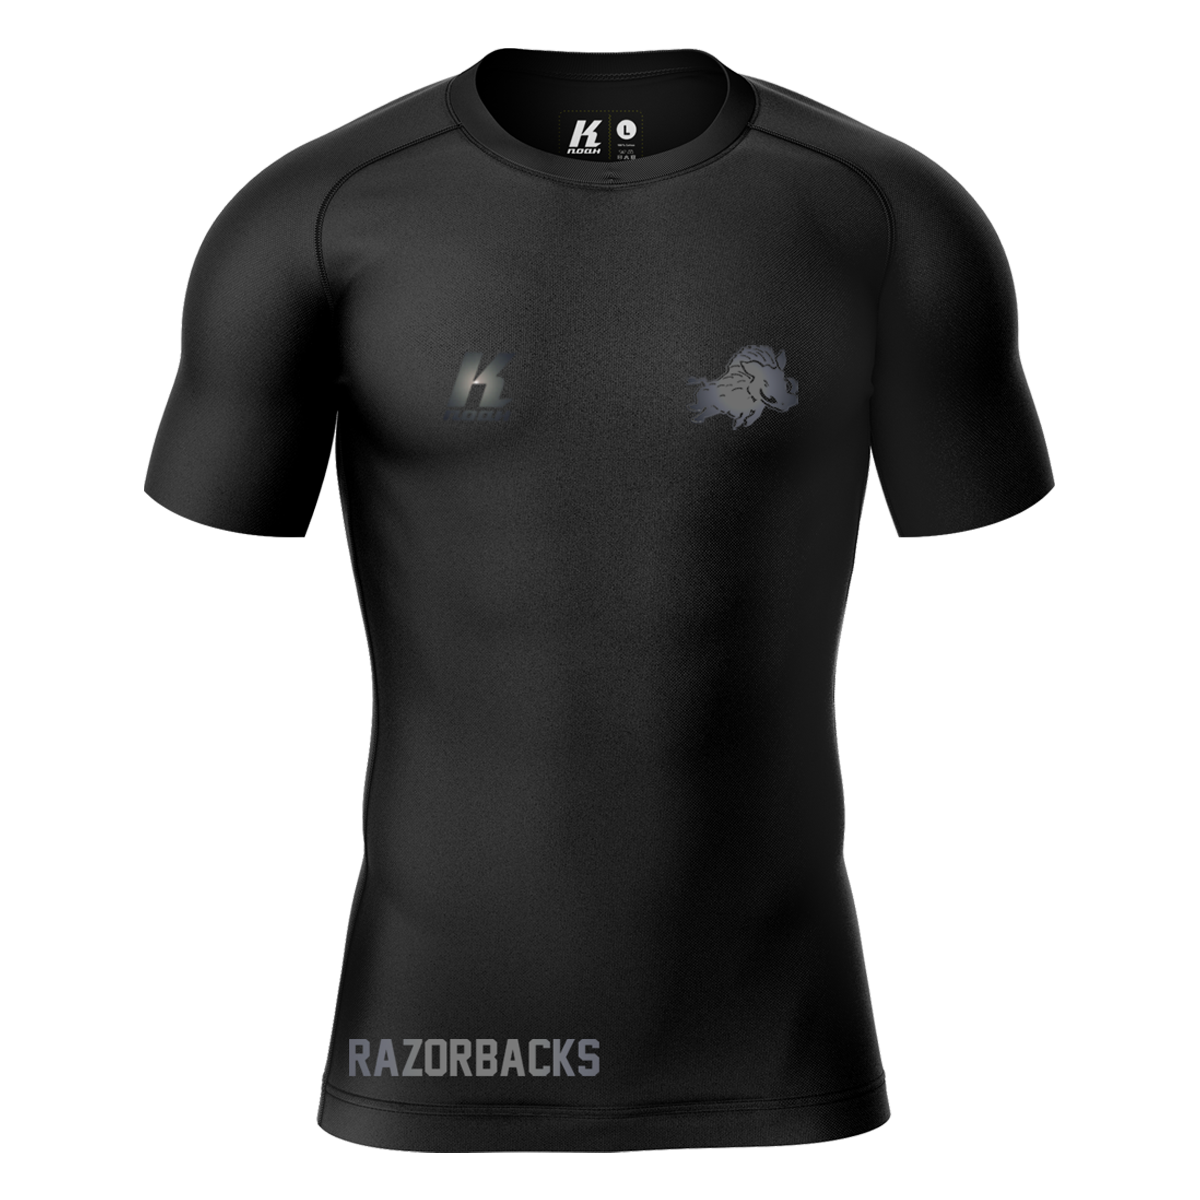 Razorbacks "Blackline" K.Tech Compression Shortsleeve Shirt